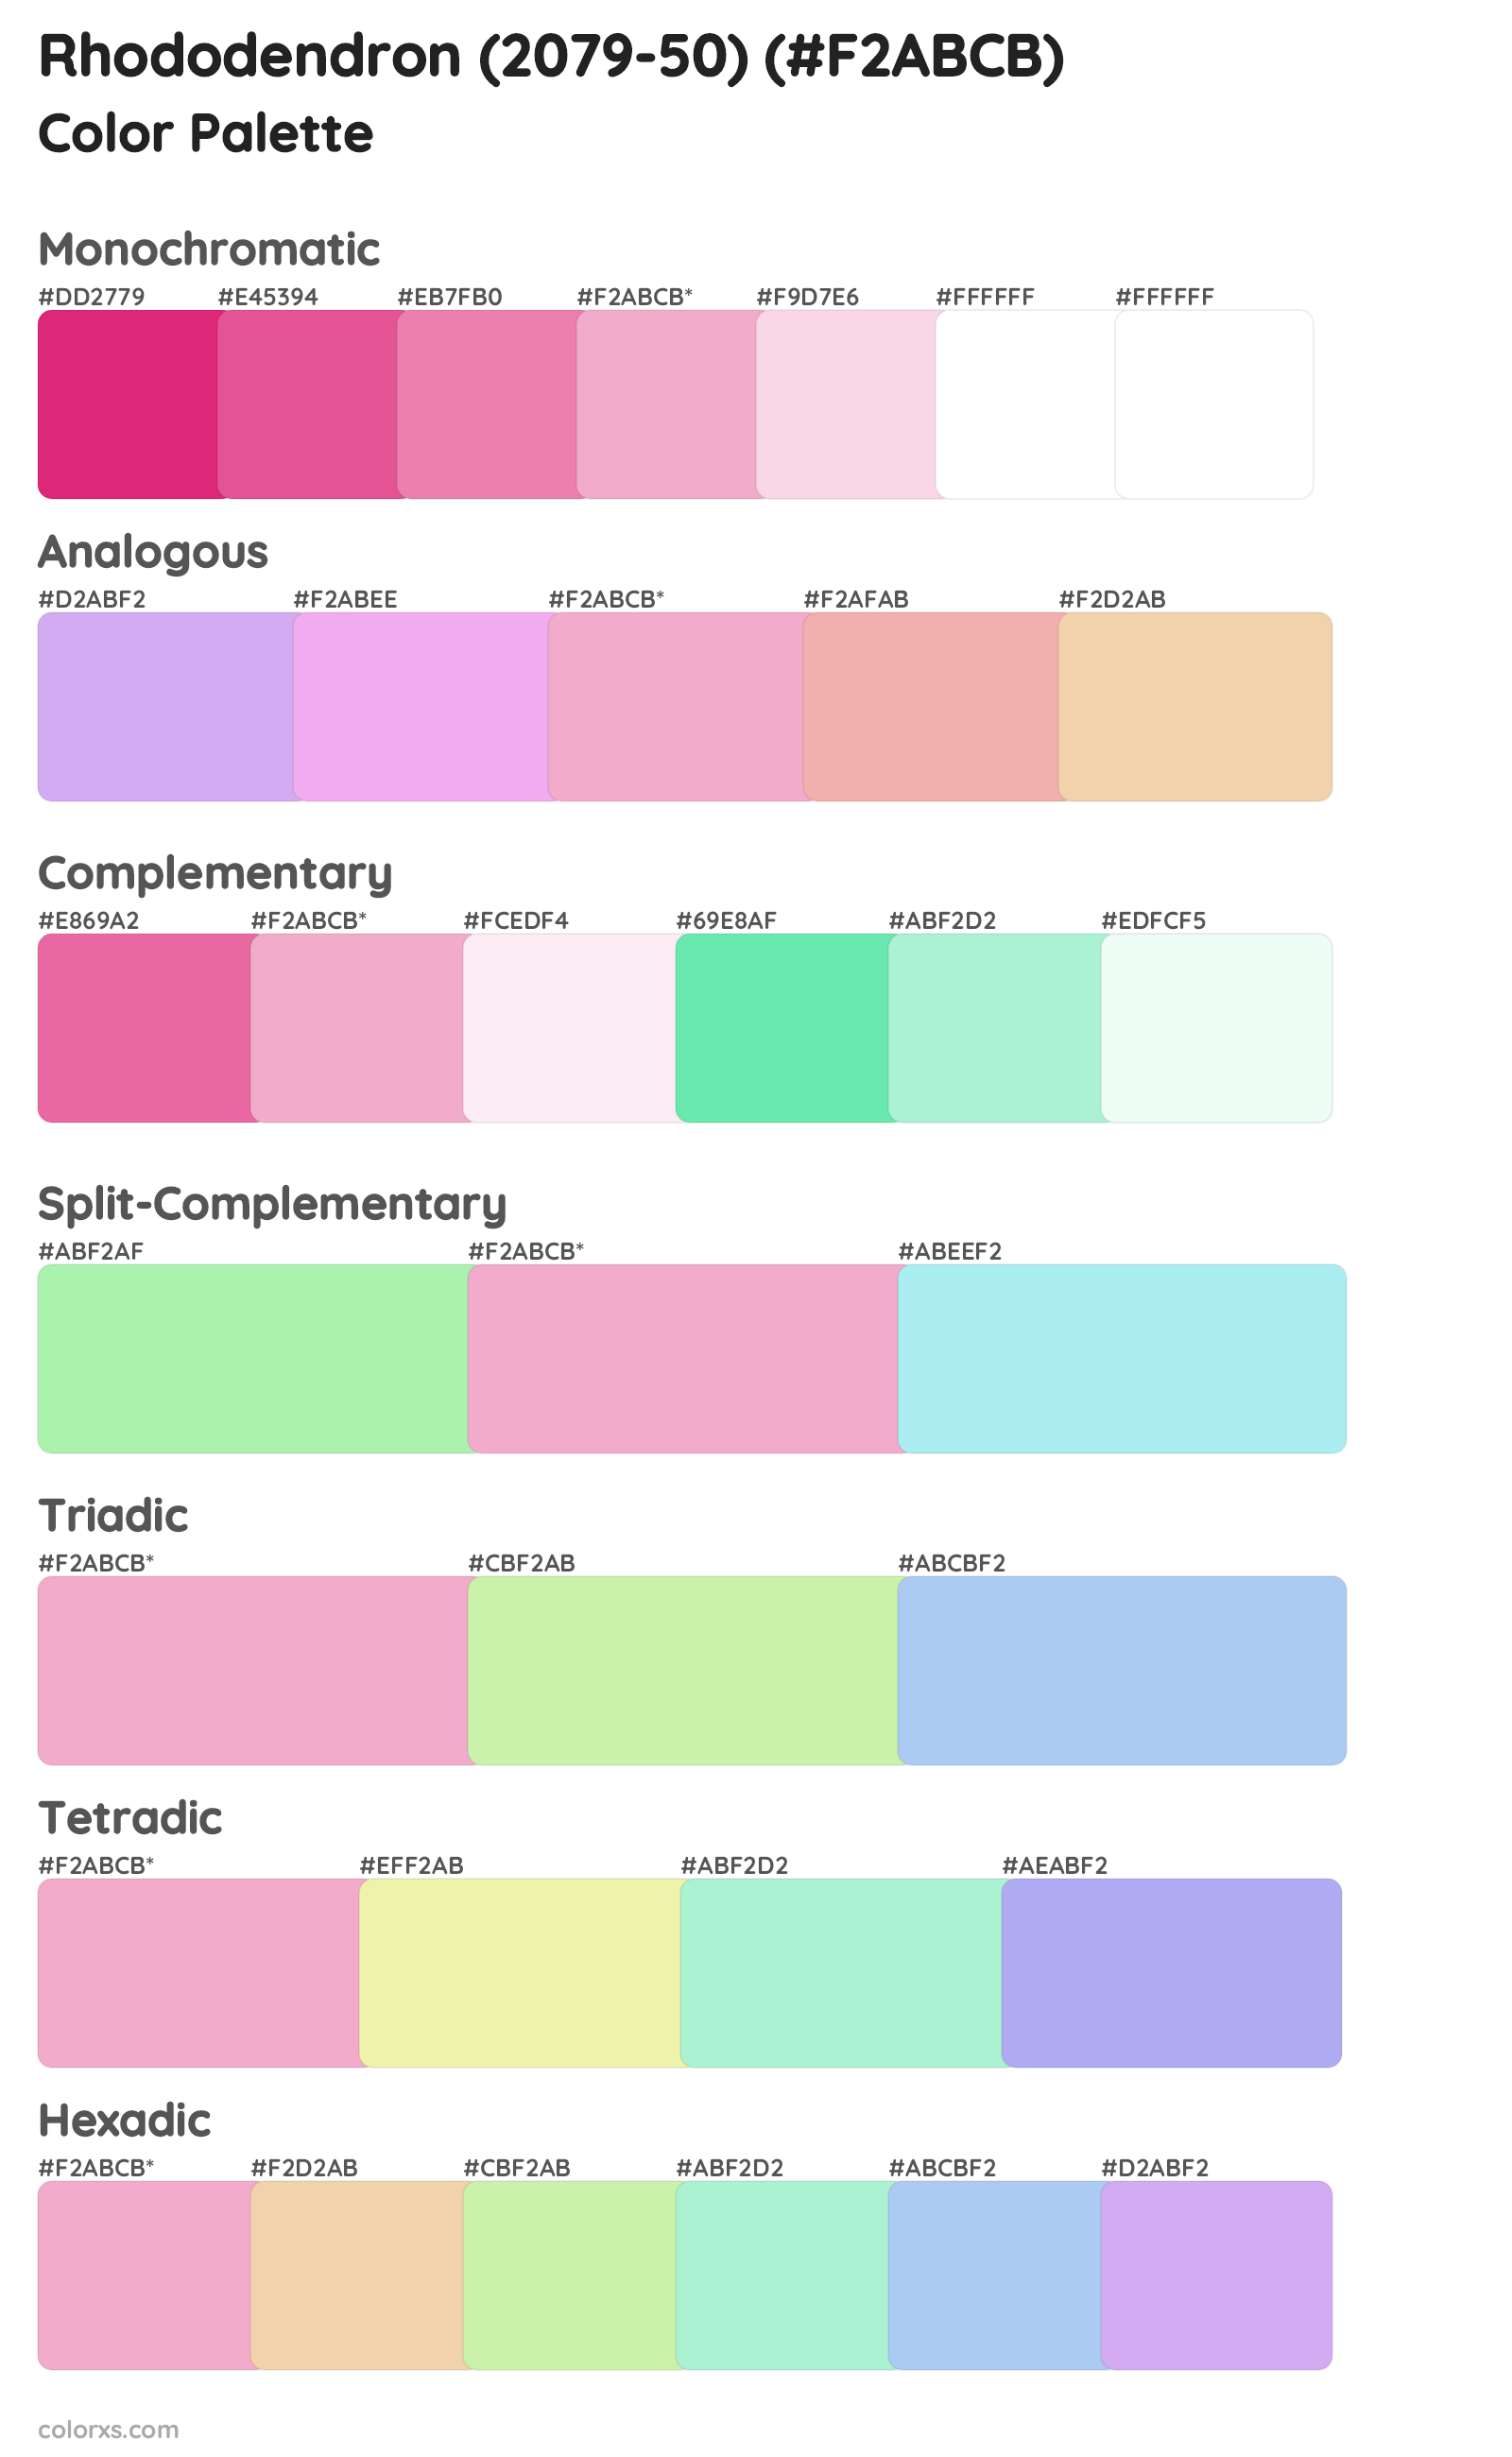 Rhododendron (2079-50) Color Scheme Palettes